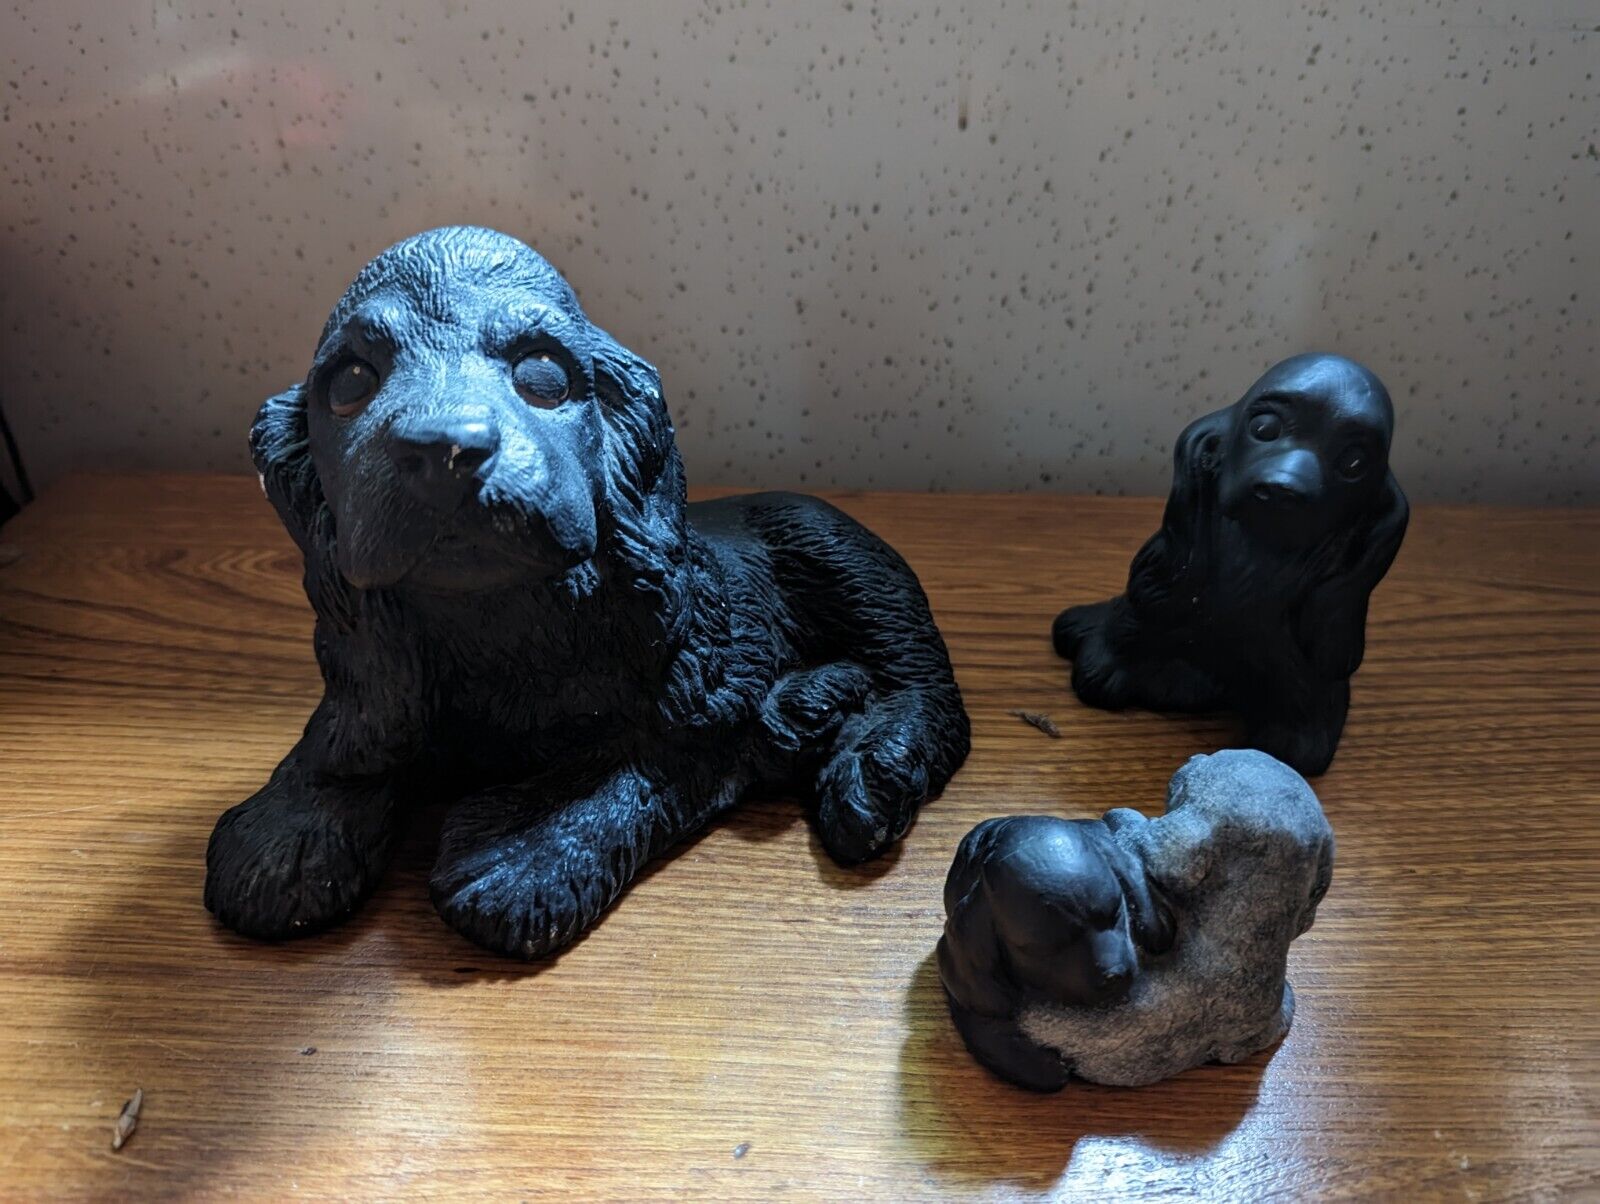 Hand-Painted Vintage Ceramic Cocker Spaniel Dog (4) Figurines - 3 Pcs. - Black